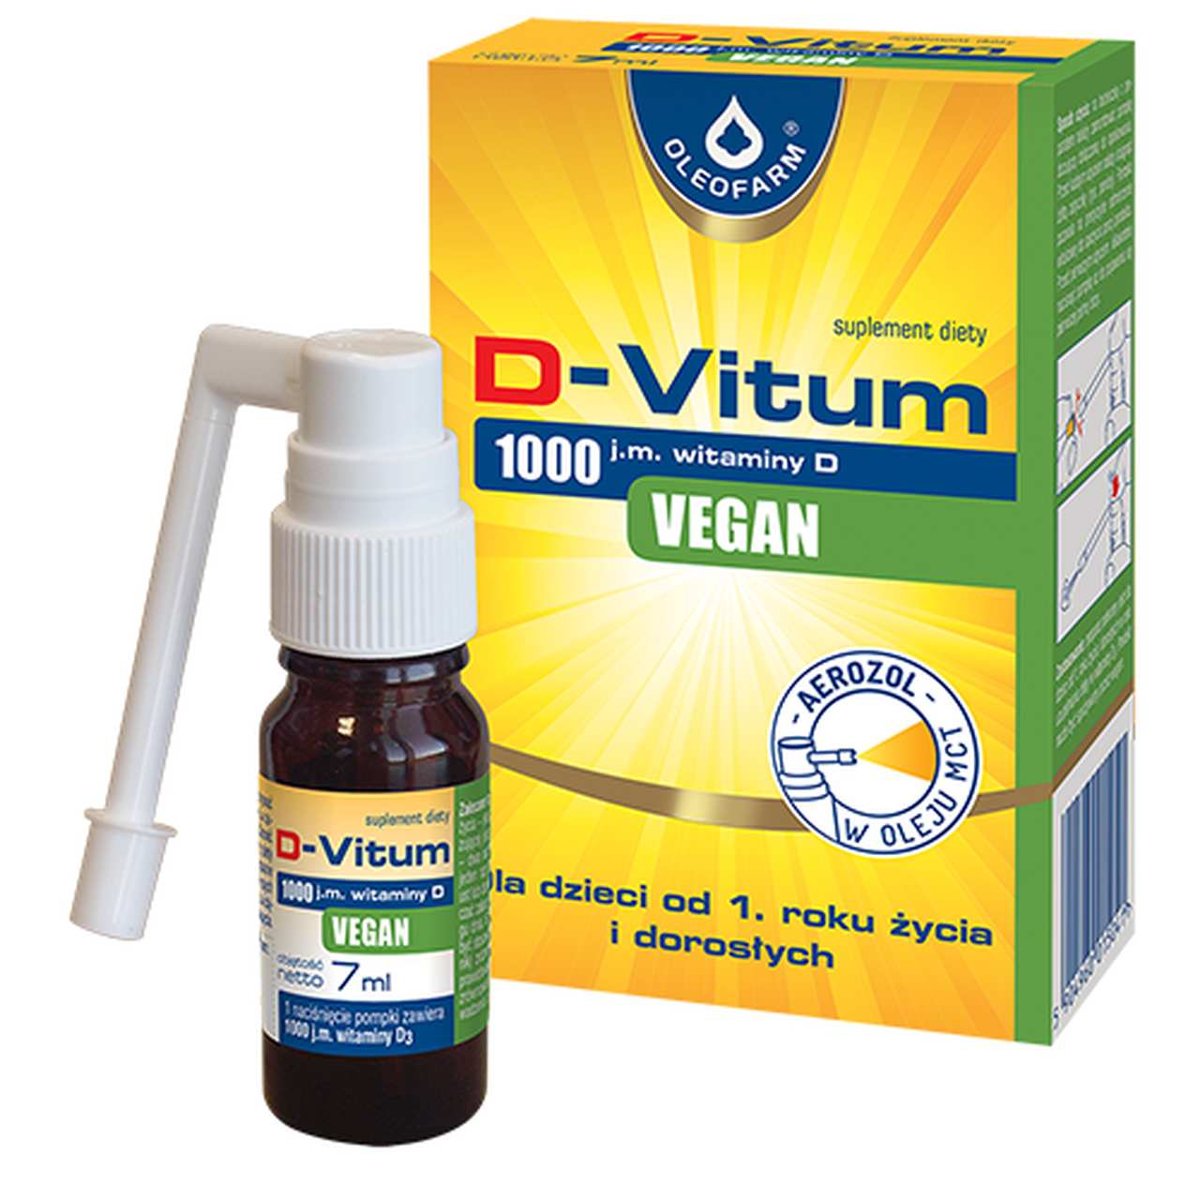 Zdjęcia - Witaminy i składniki mineralne D-vitum Vegan, suplement diety, aerozol, 7 ml